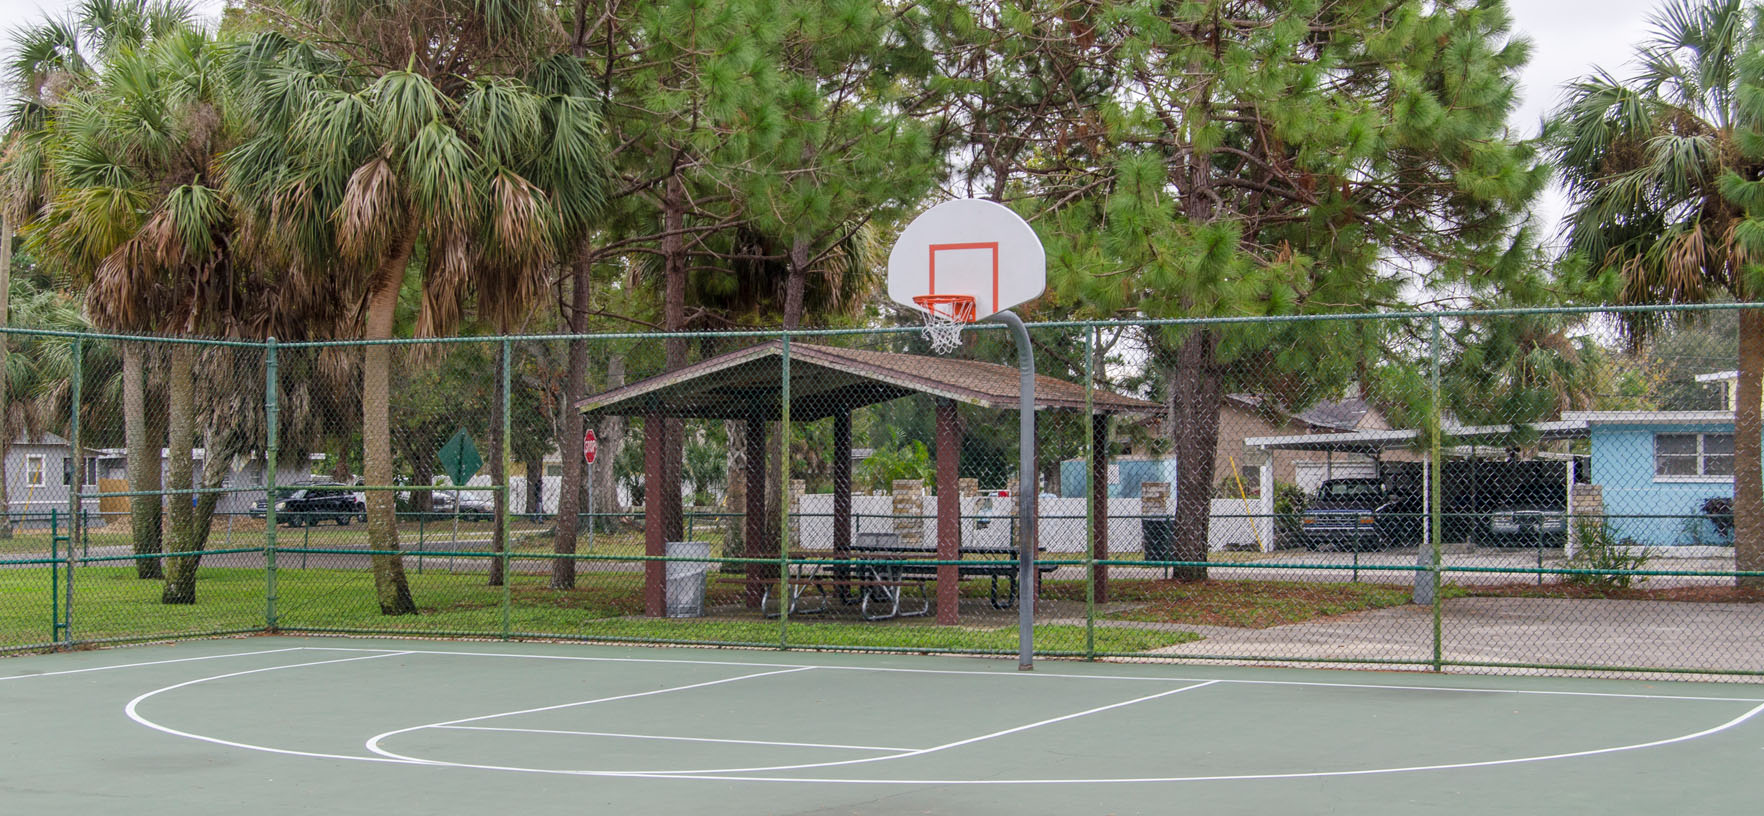 Playlot 2 outdoor basketball court